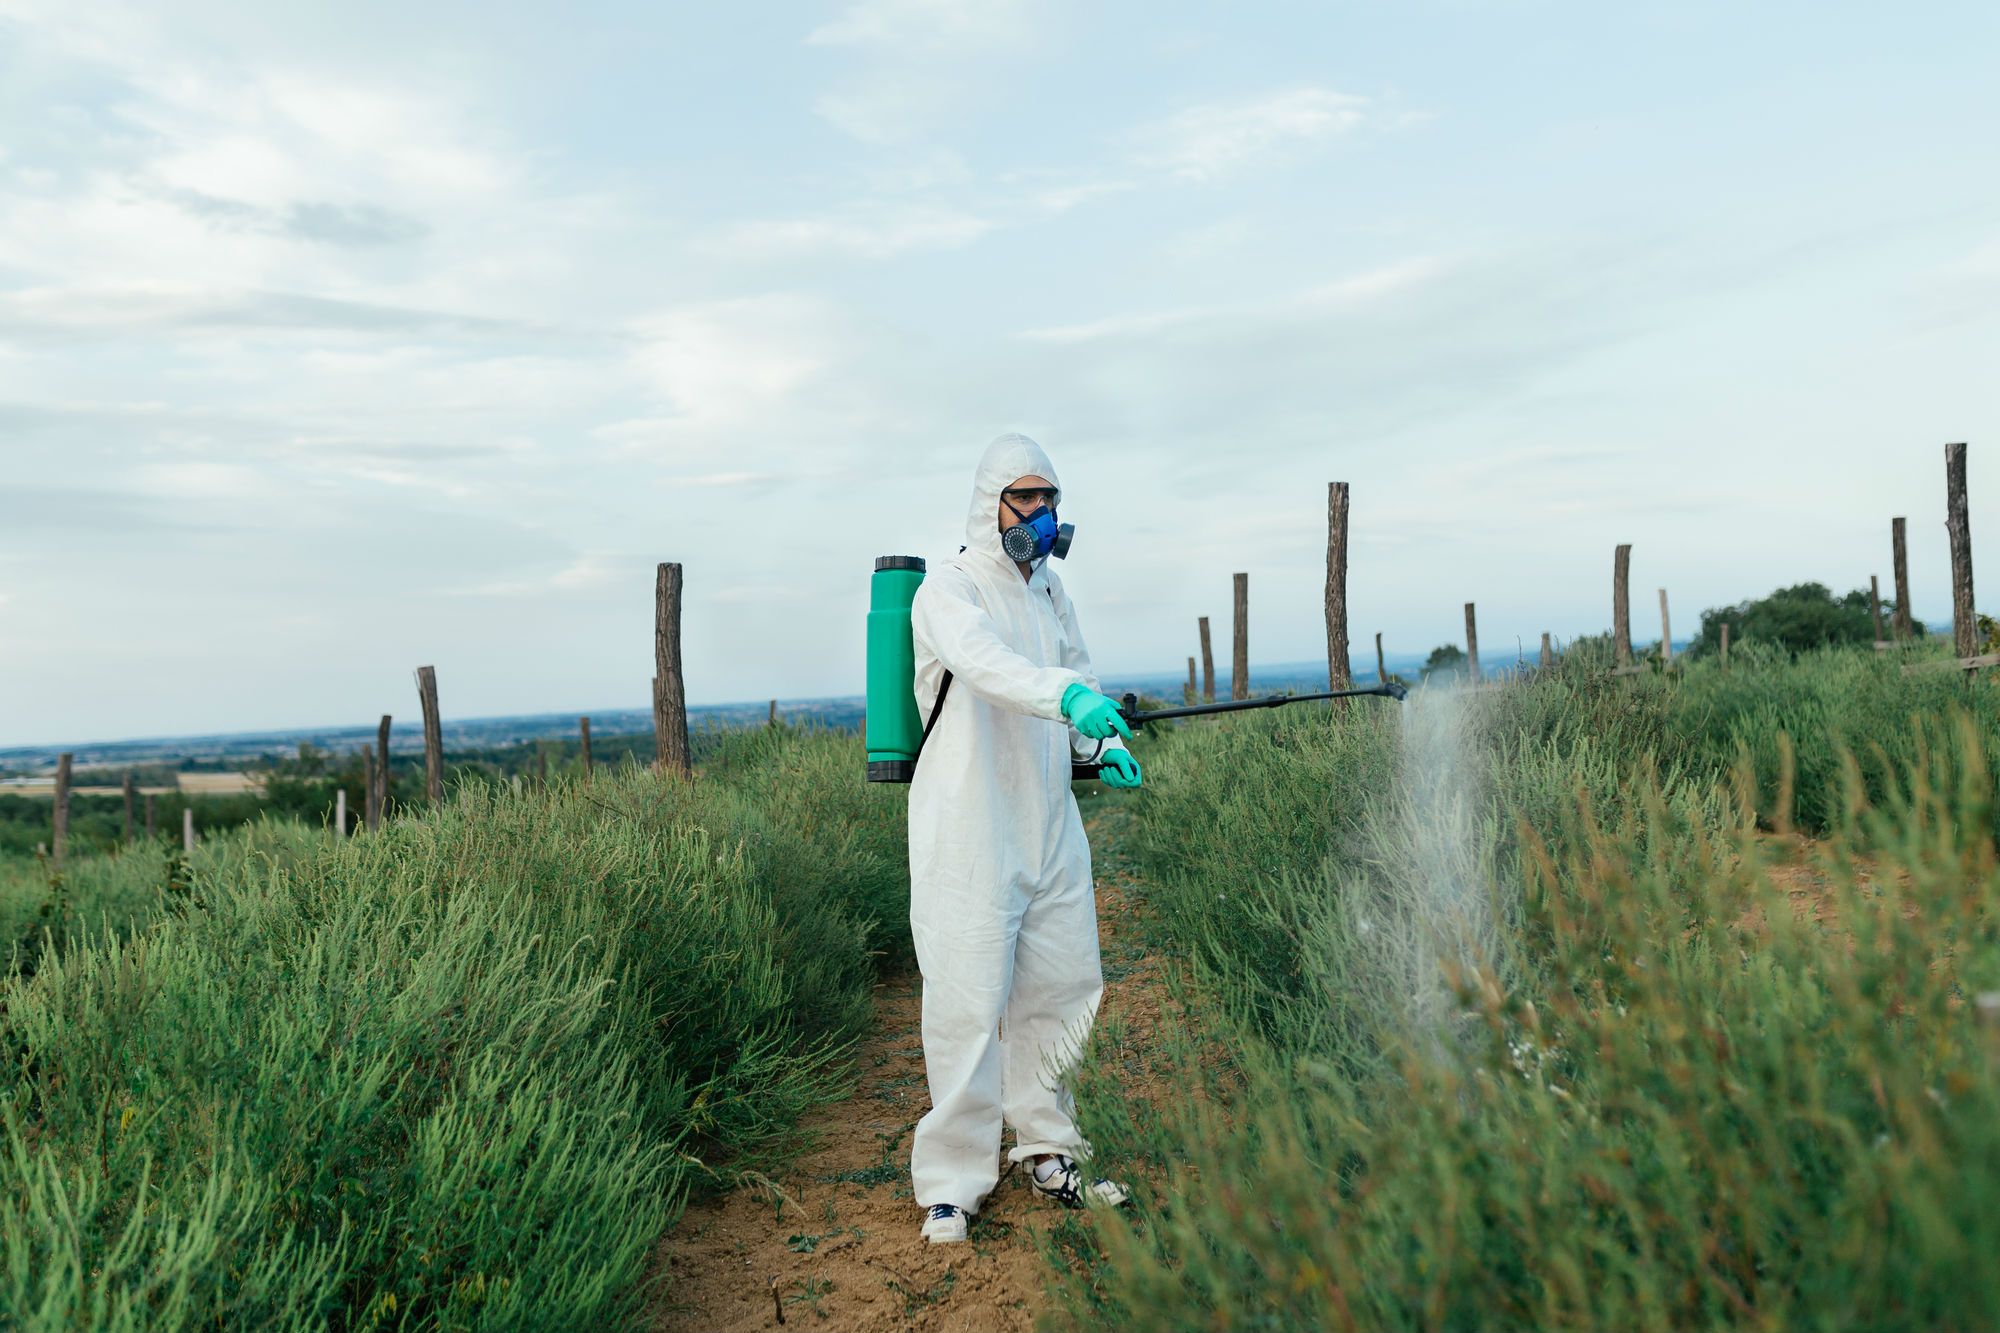 Worker in hazmat suit spraying chemicals